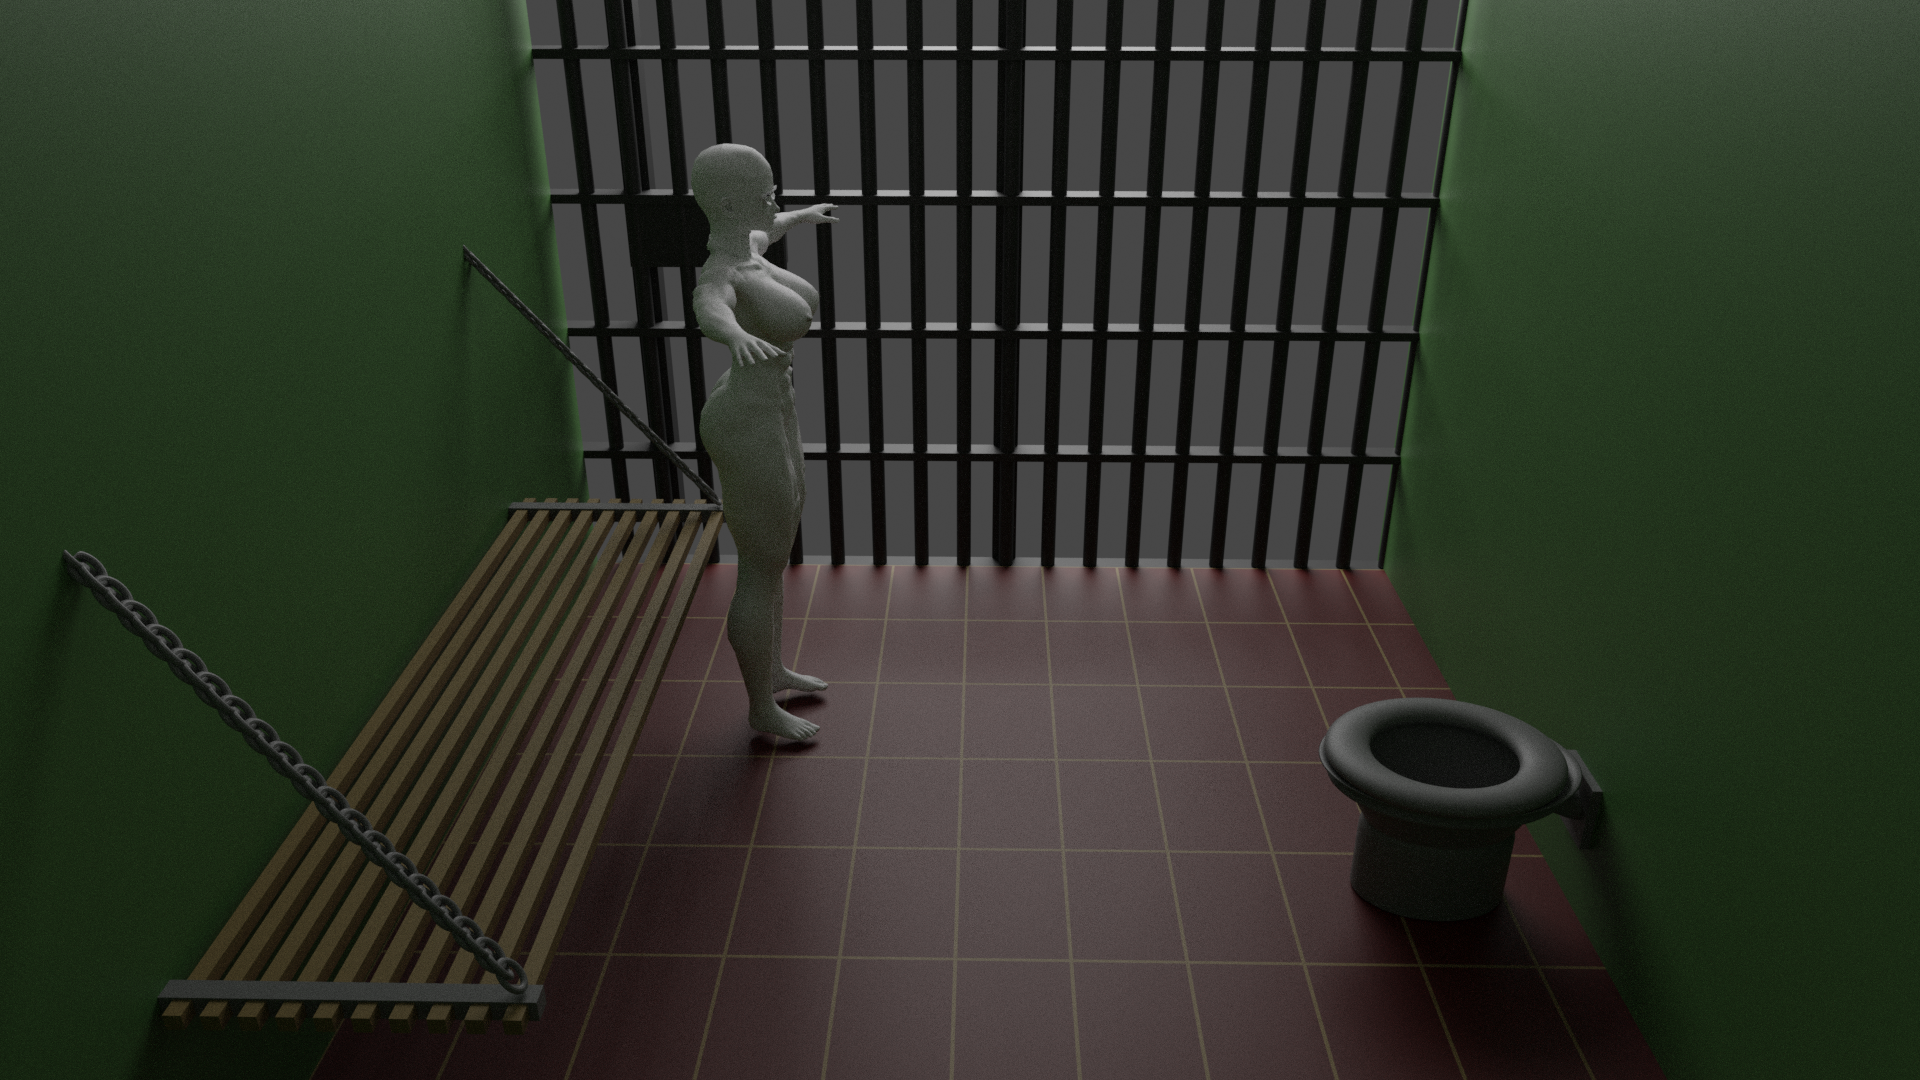 Prison.png